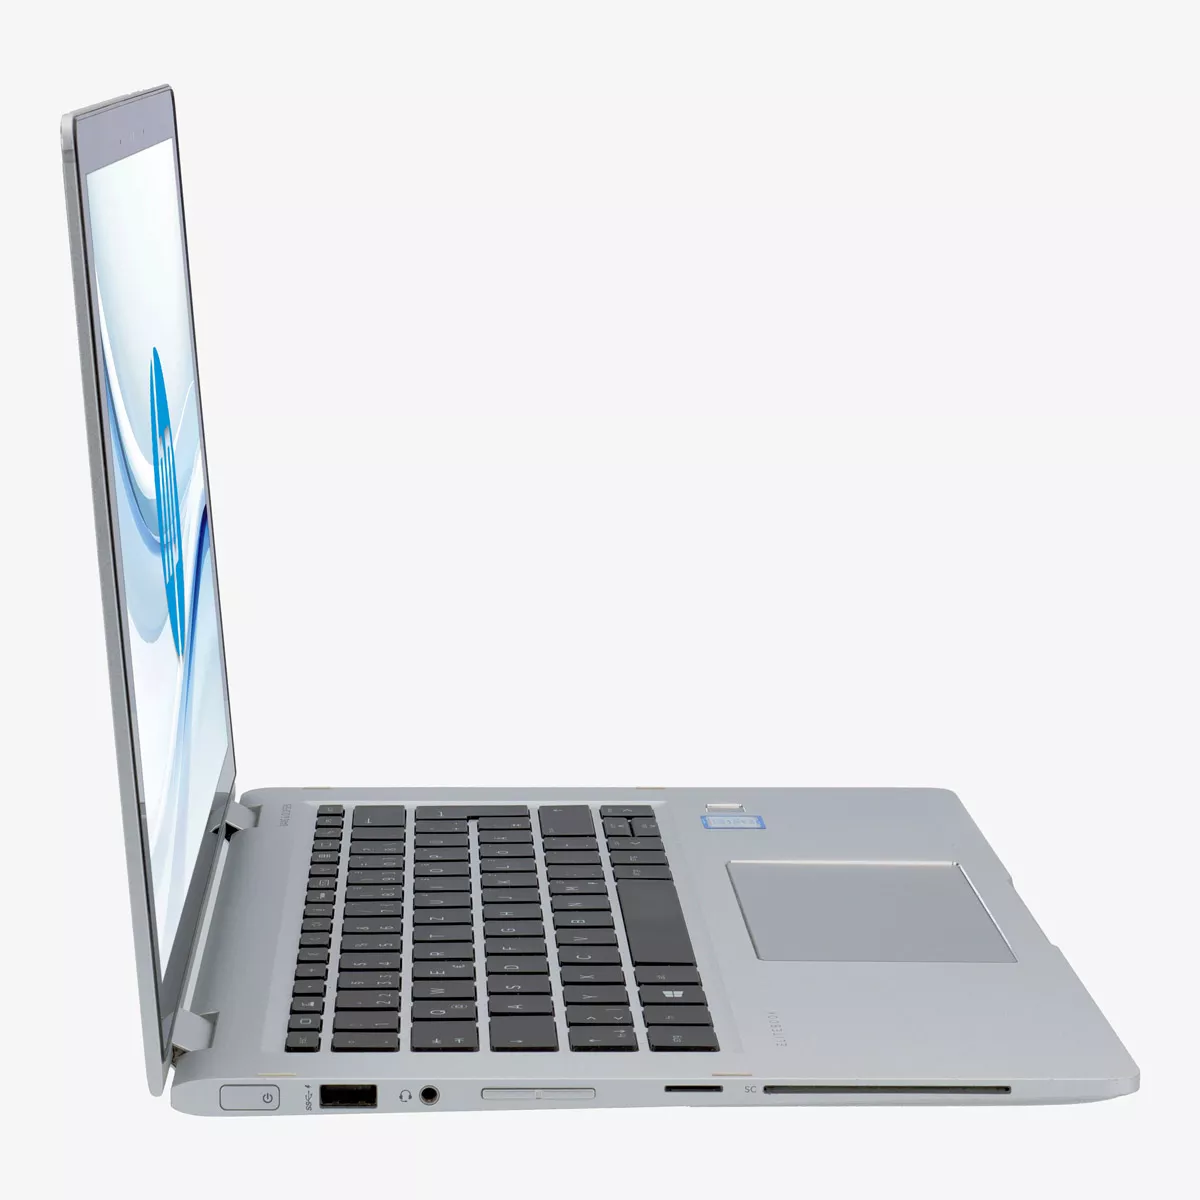 HP EliteBook x360 1030 G2 Core i5 7300U Touch 8 GB 500 GB M.2 nVME SSD Webcam B